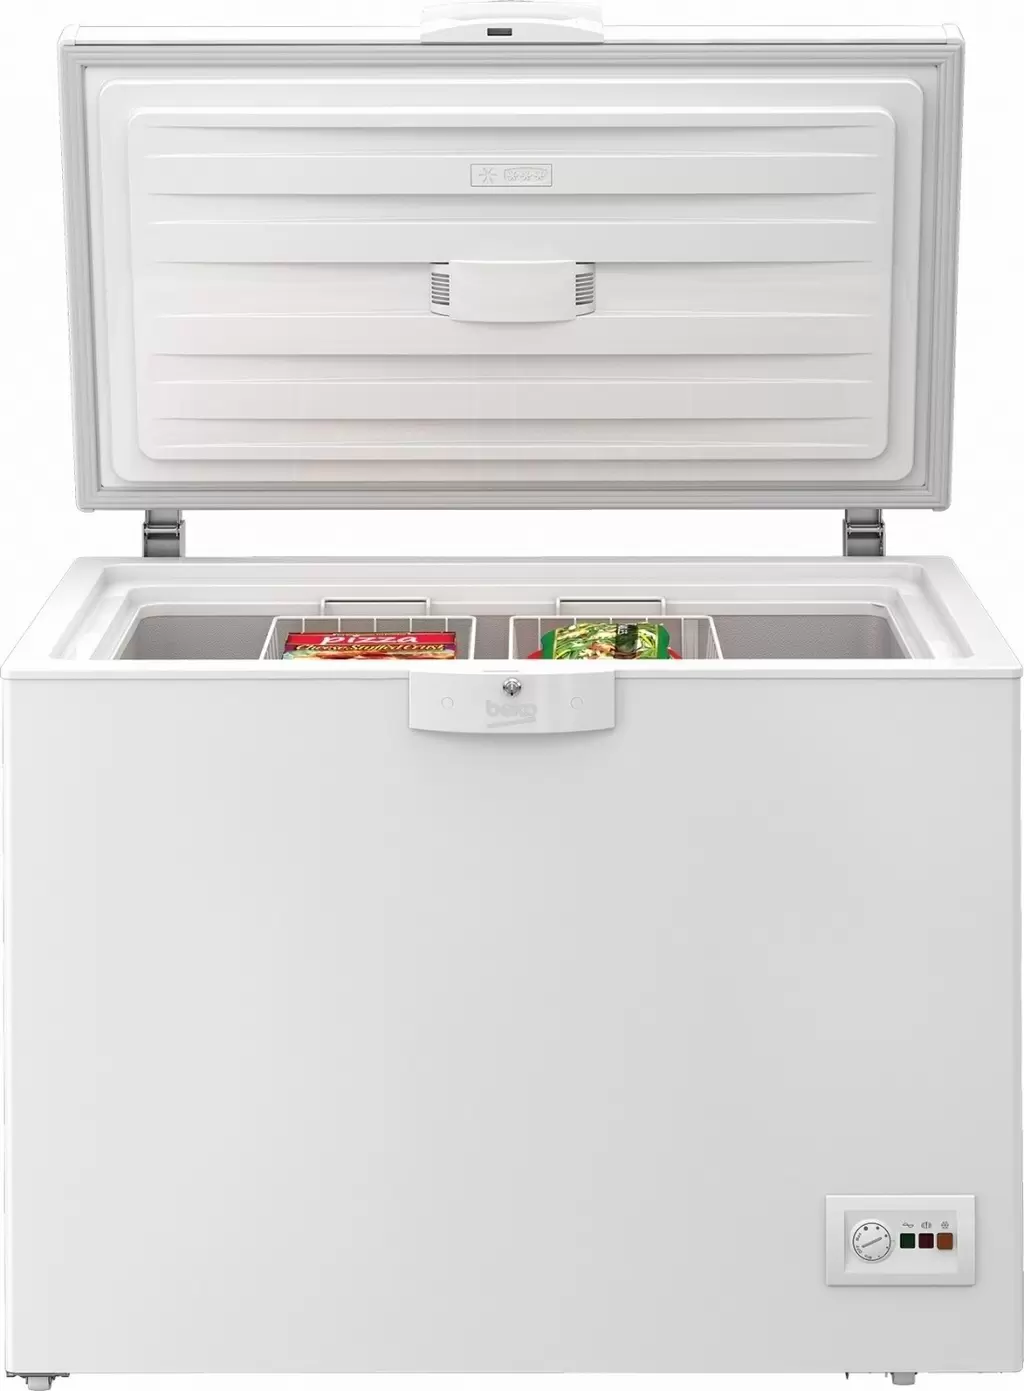 Ladă frigorifică Beko HSA24540N, alb